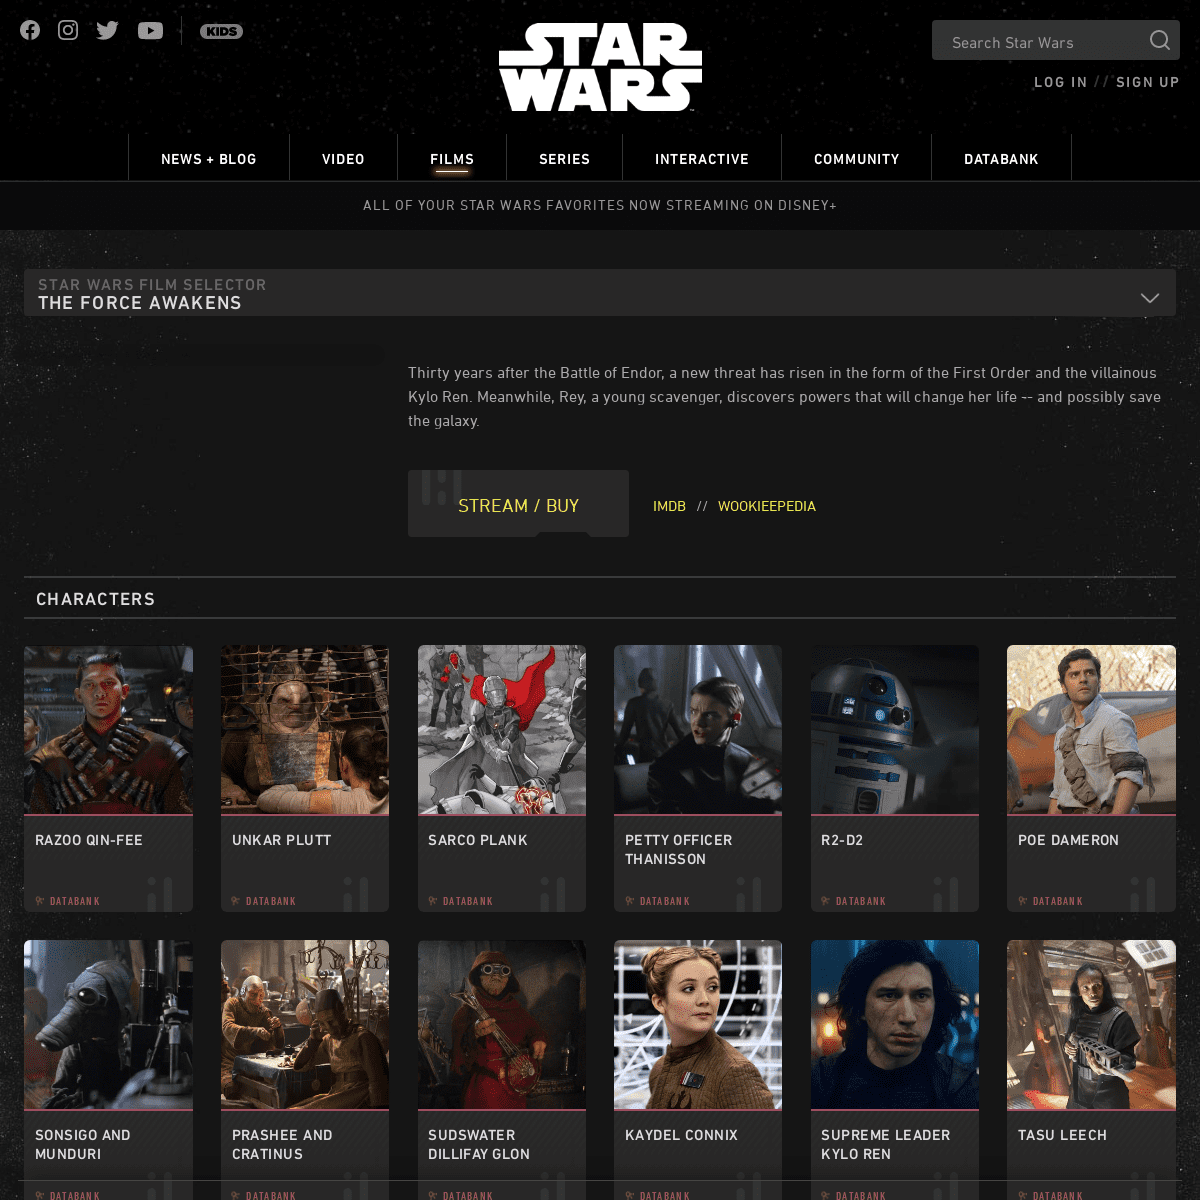 A complete backup of https://www.starwars.com/films/star-wars-episode-vii-the-force-awakens